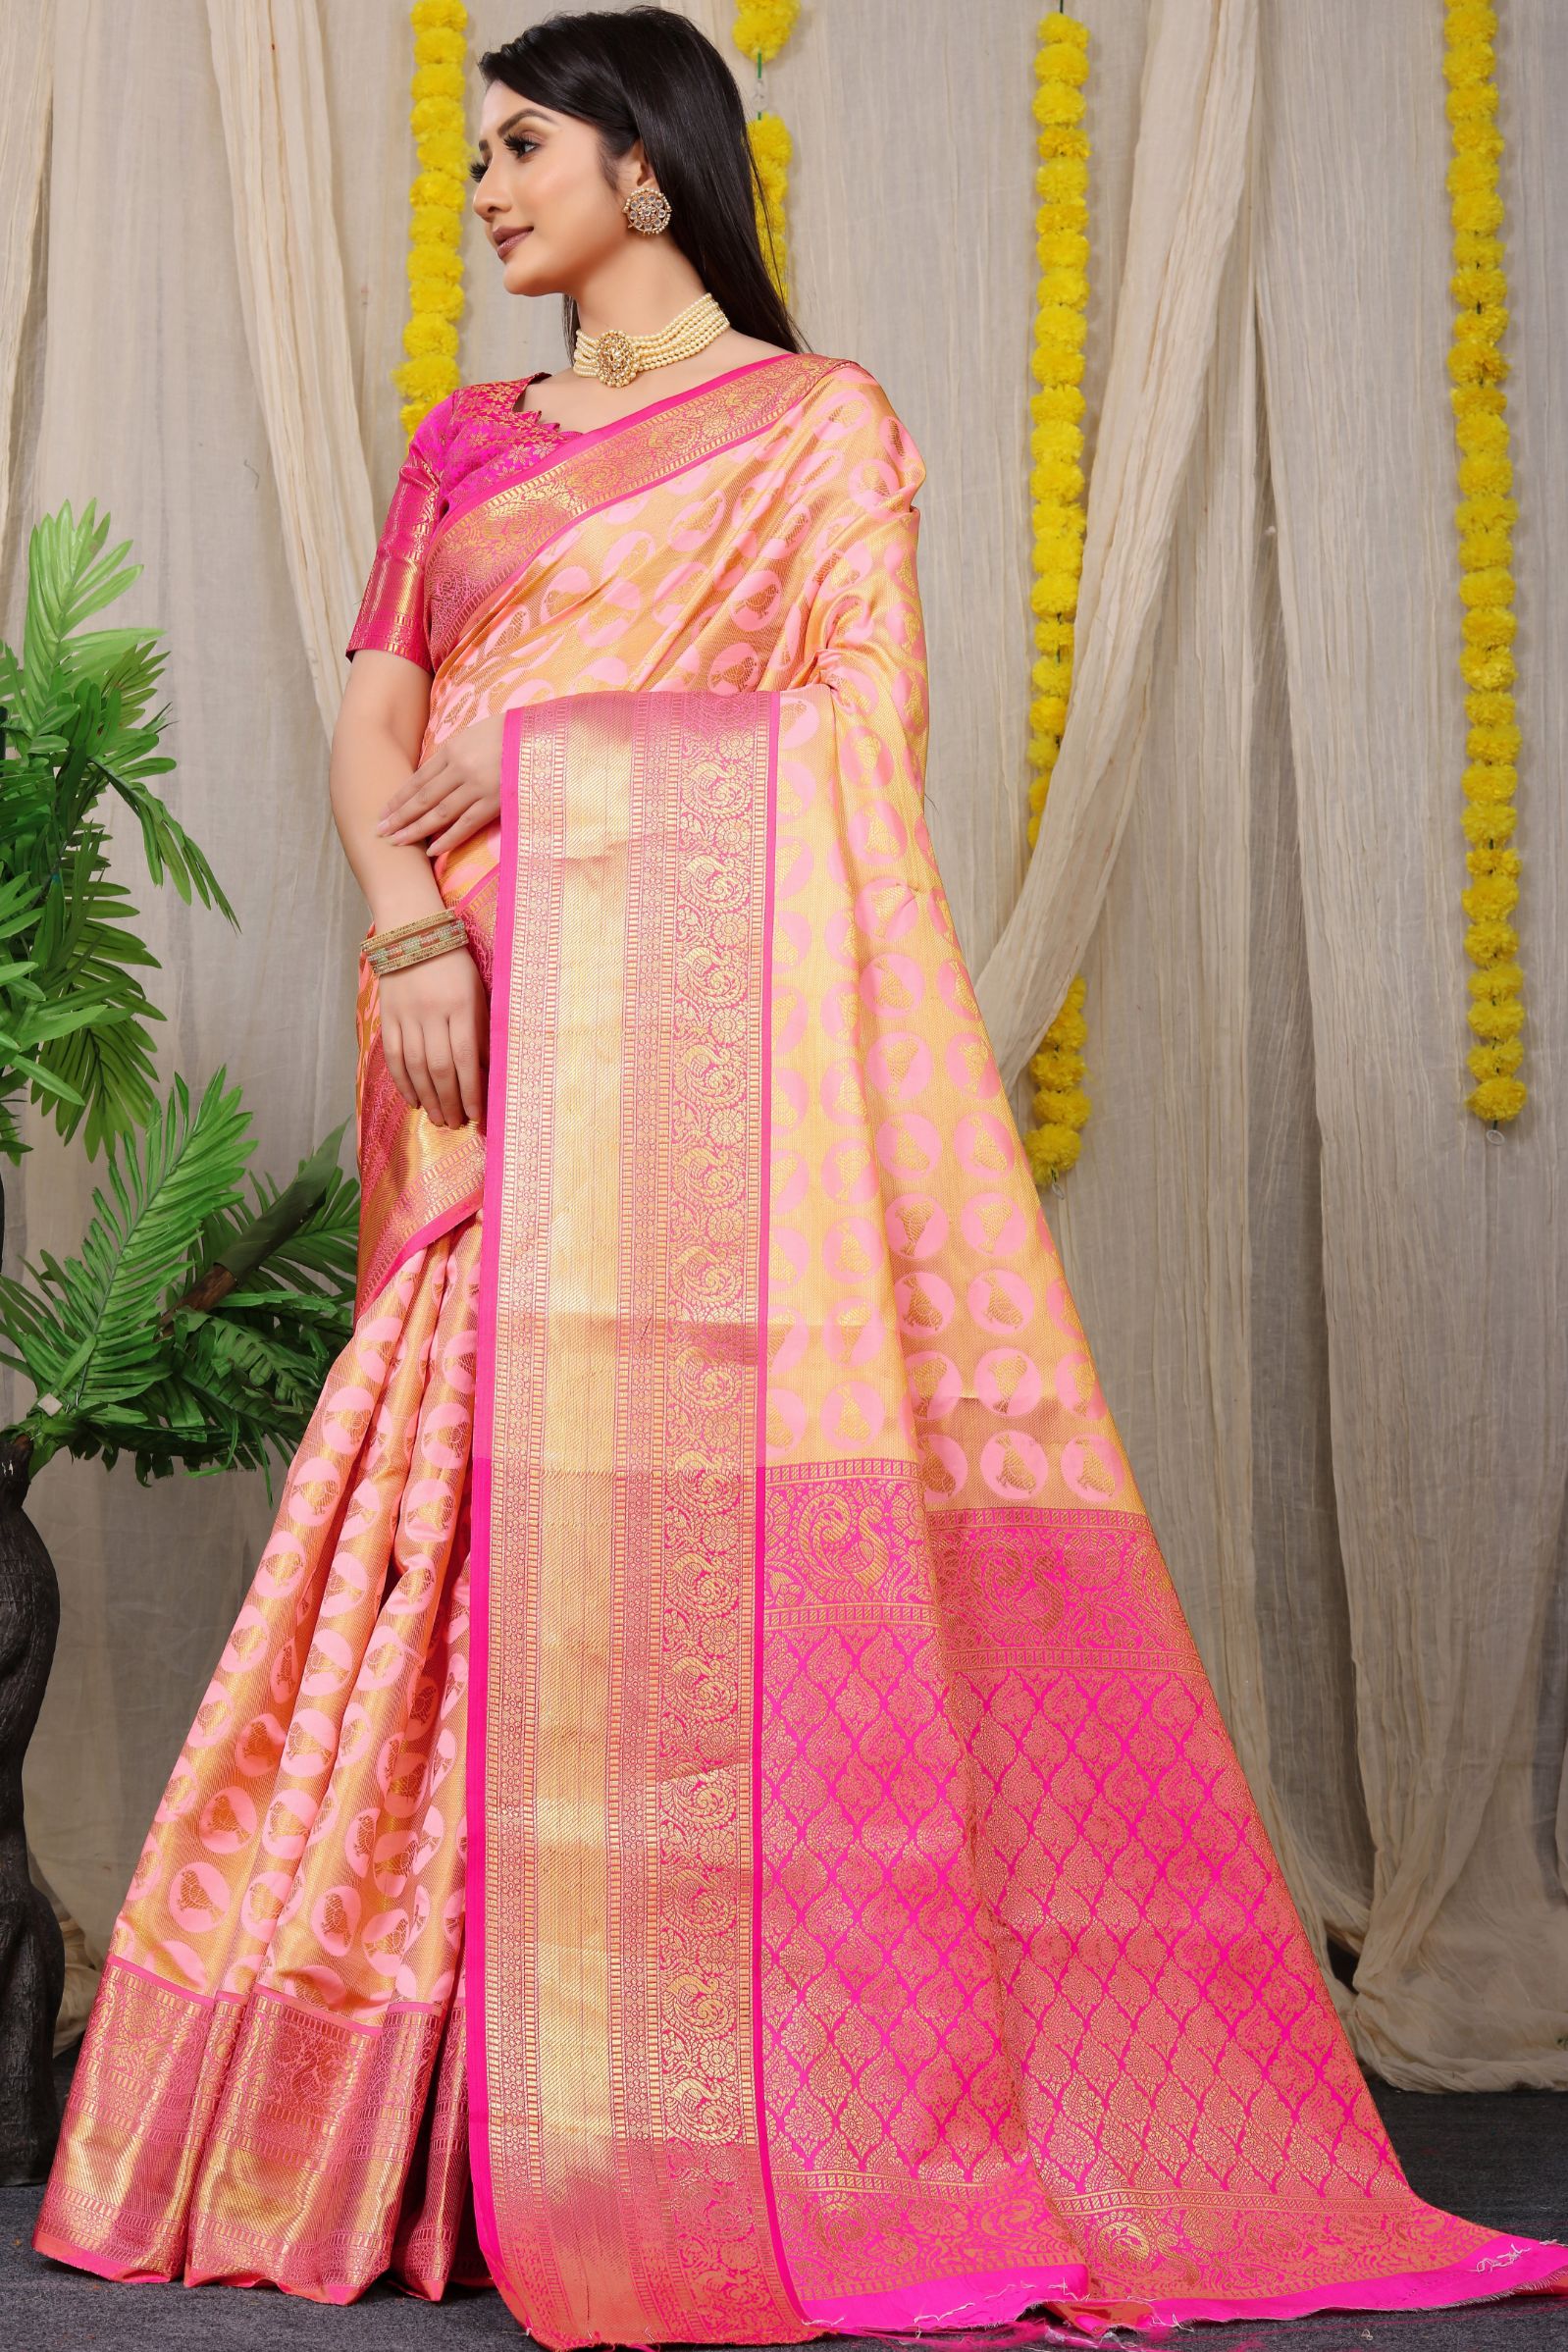 peach color Shop for Designer South Indian Saree Online